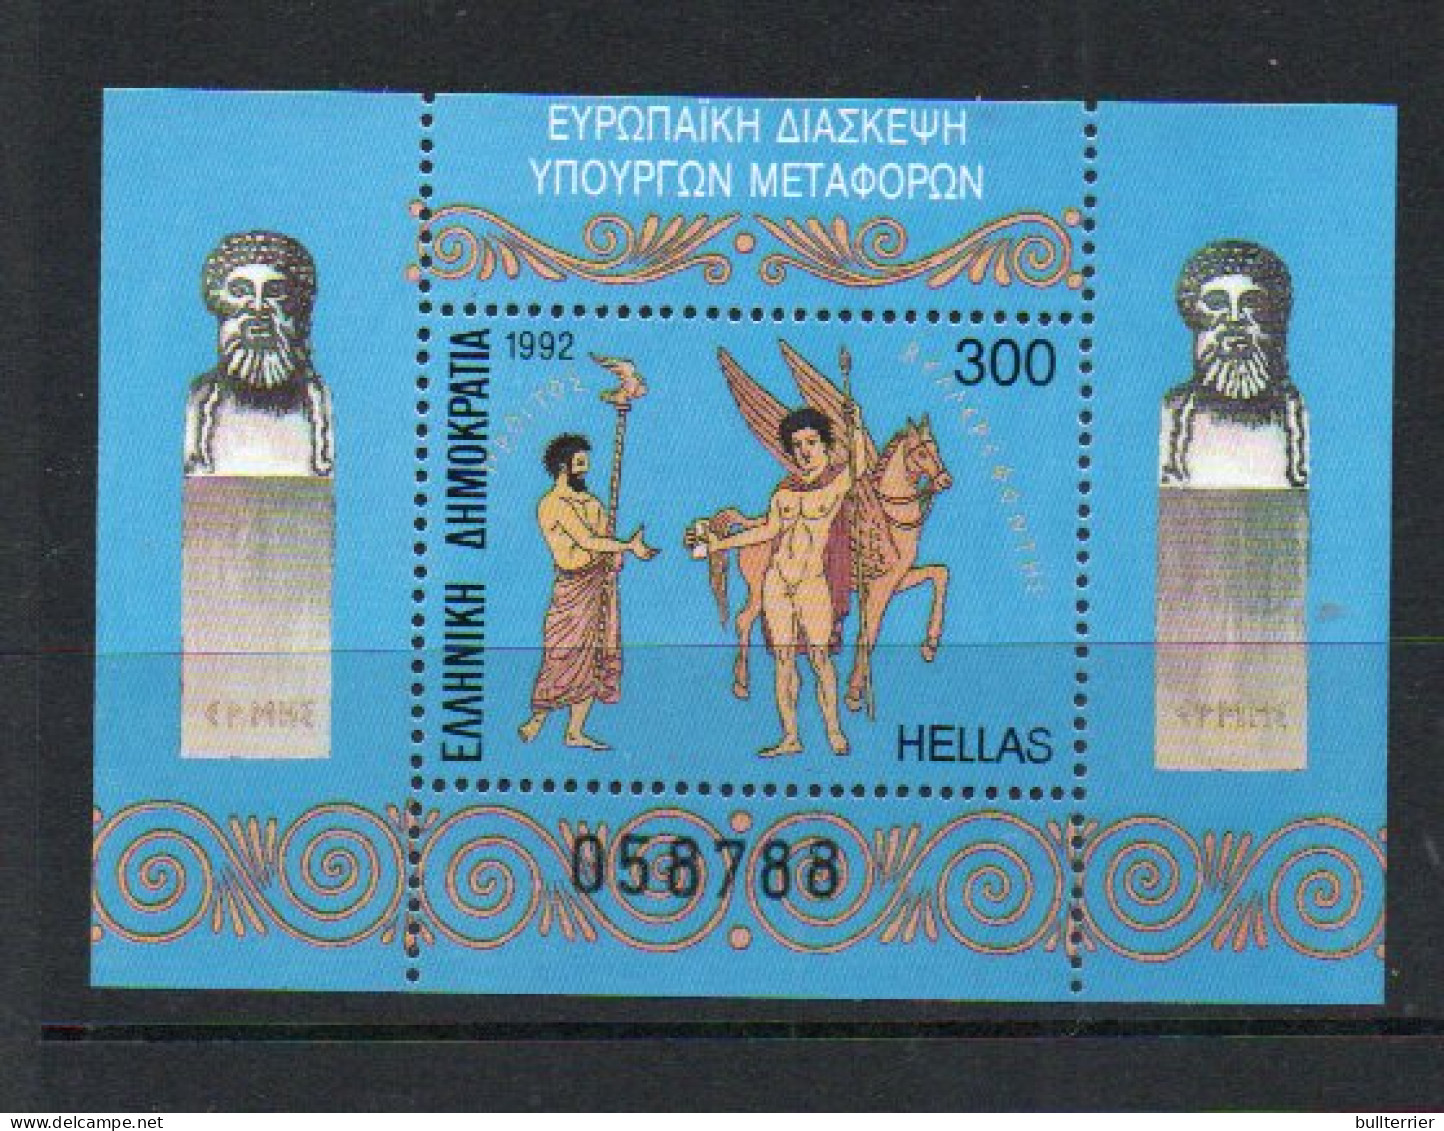 GREECE - 1992- EUROPEAN TRANSPORT MINISTERS UCONF  (sg Ms 1903)  SOUVENIR SHEET  MINT NEVER HINGED,SG £16 - Nuevos